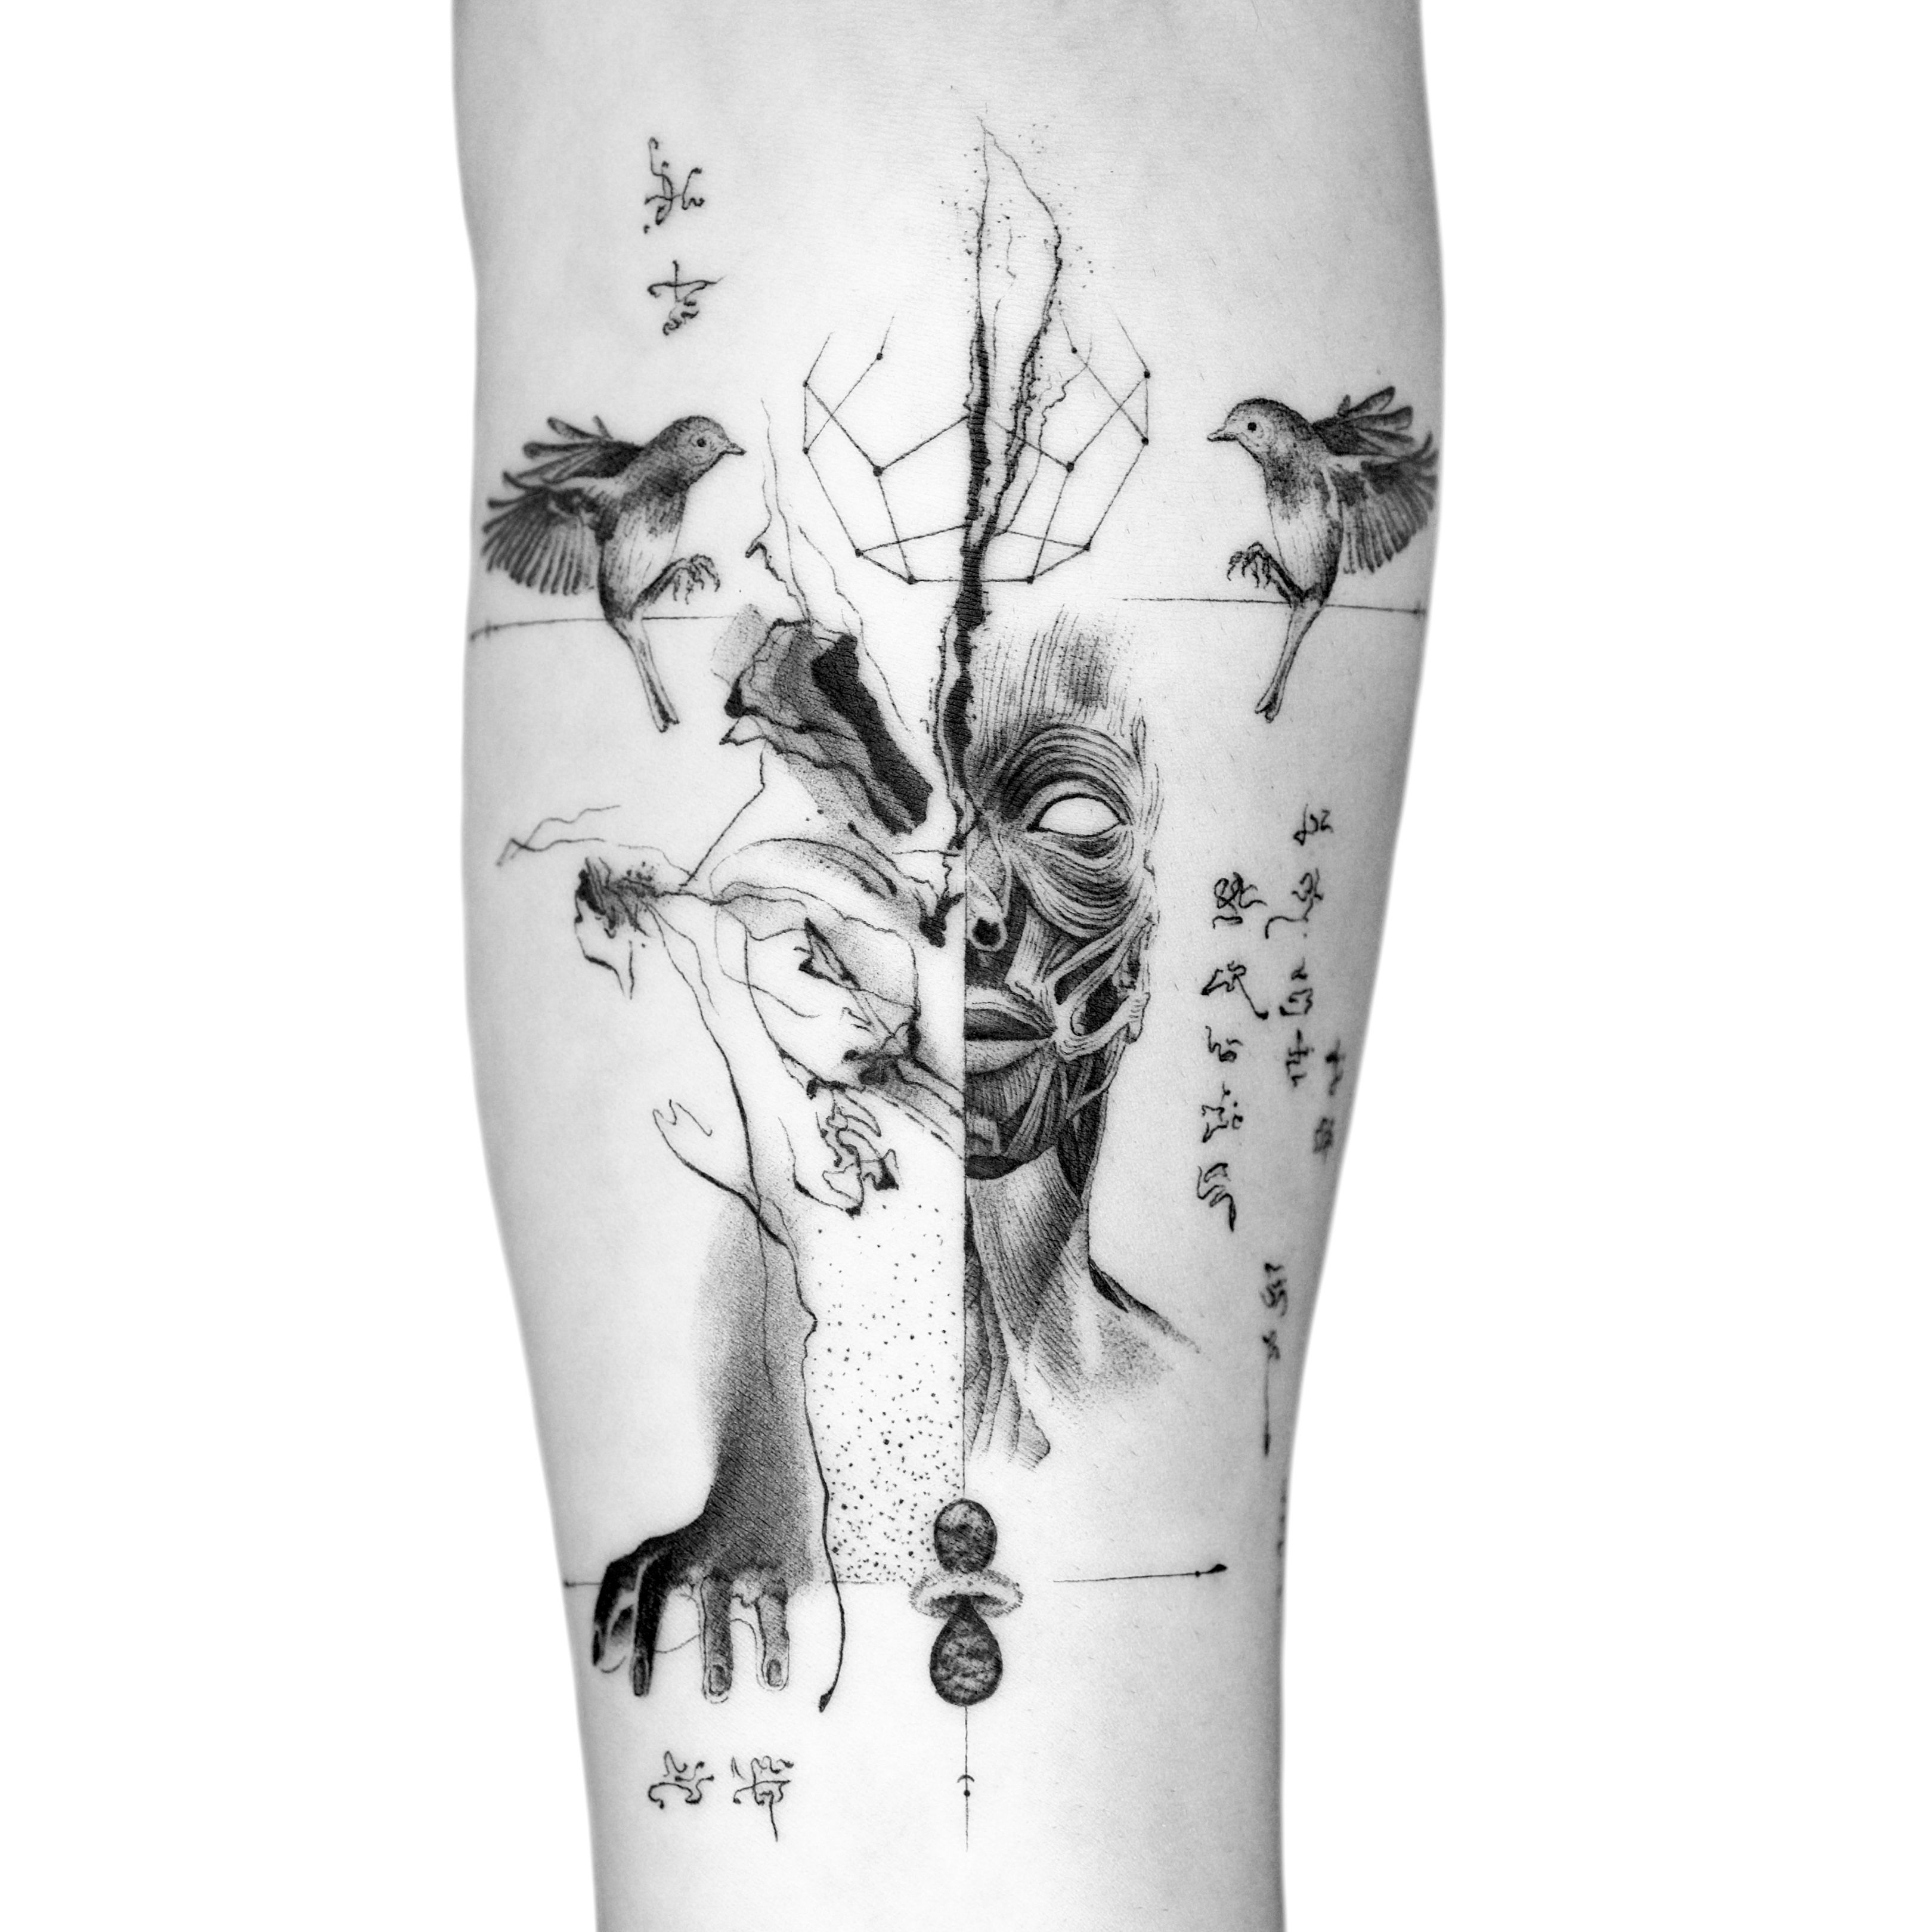 Connected life story  Tattoocom  Tattoo sleeve designs Full sleeve  tattoo design Sleeve tattoos